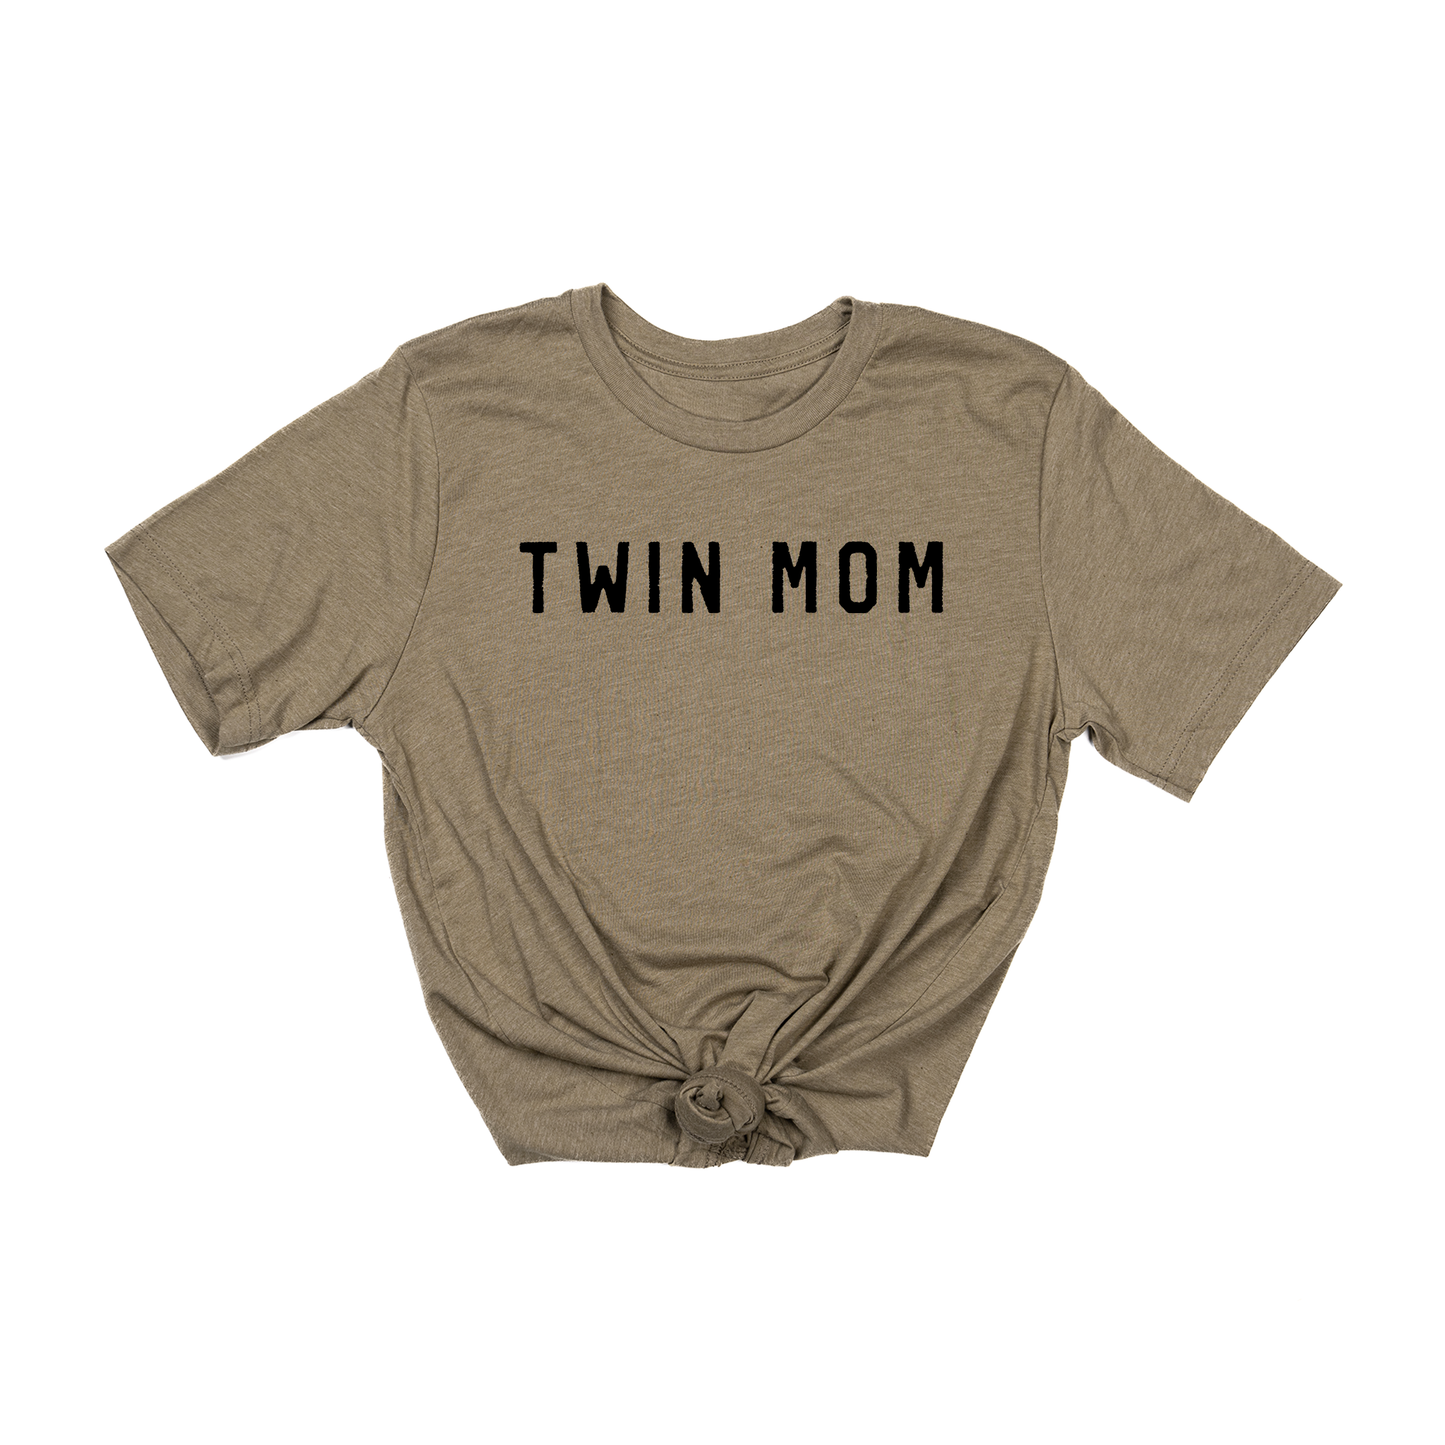 Twin Mom (Black) - Tee (Olive)